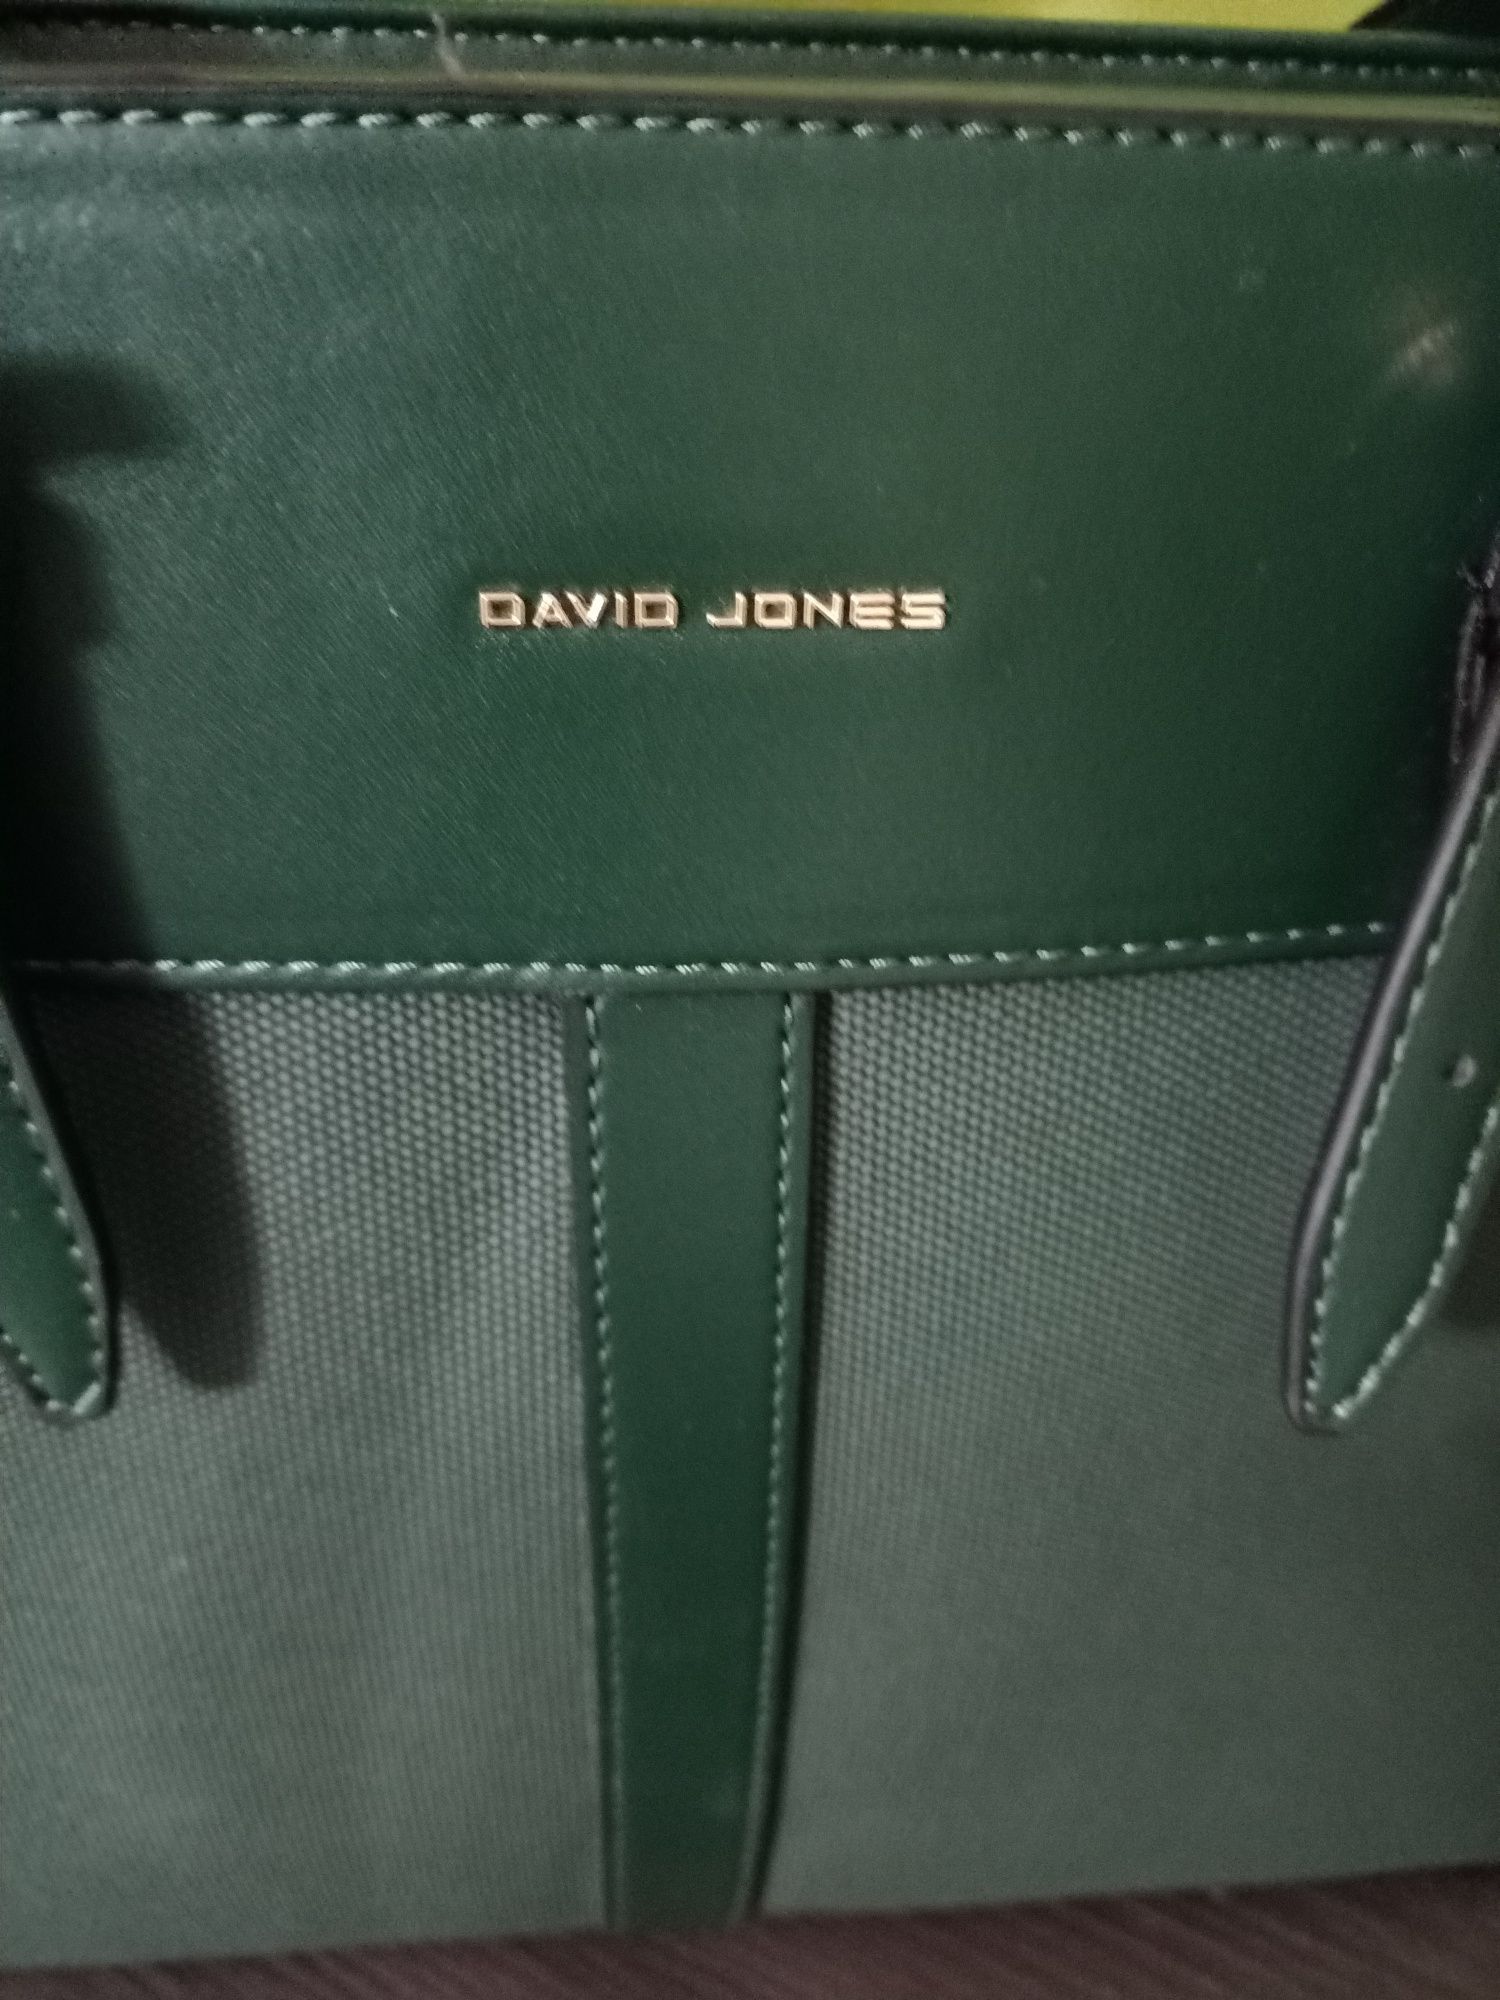 Nowa torba shopperka, piękny zielony kolor